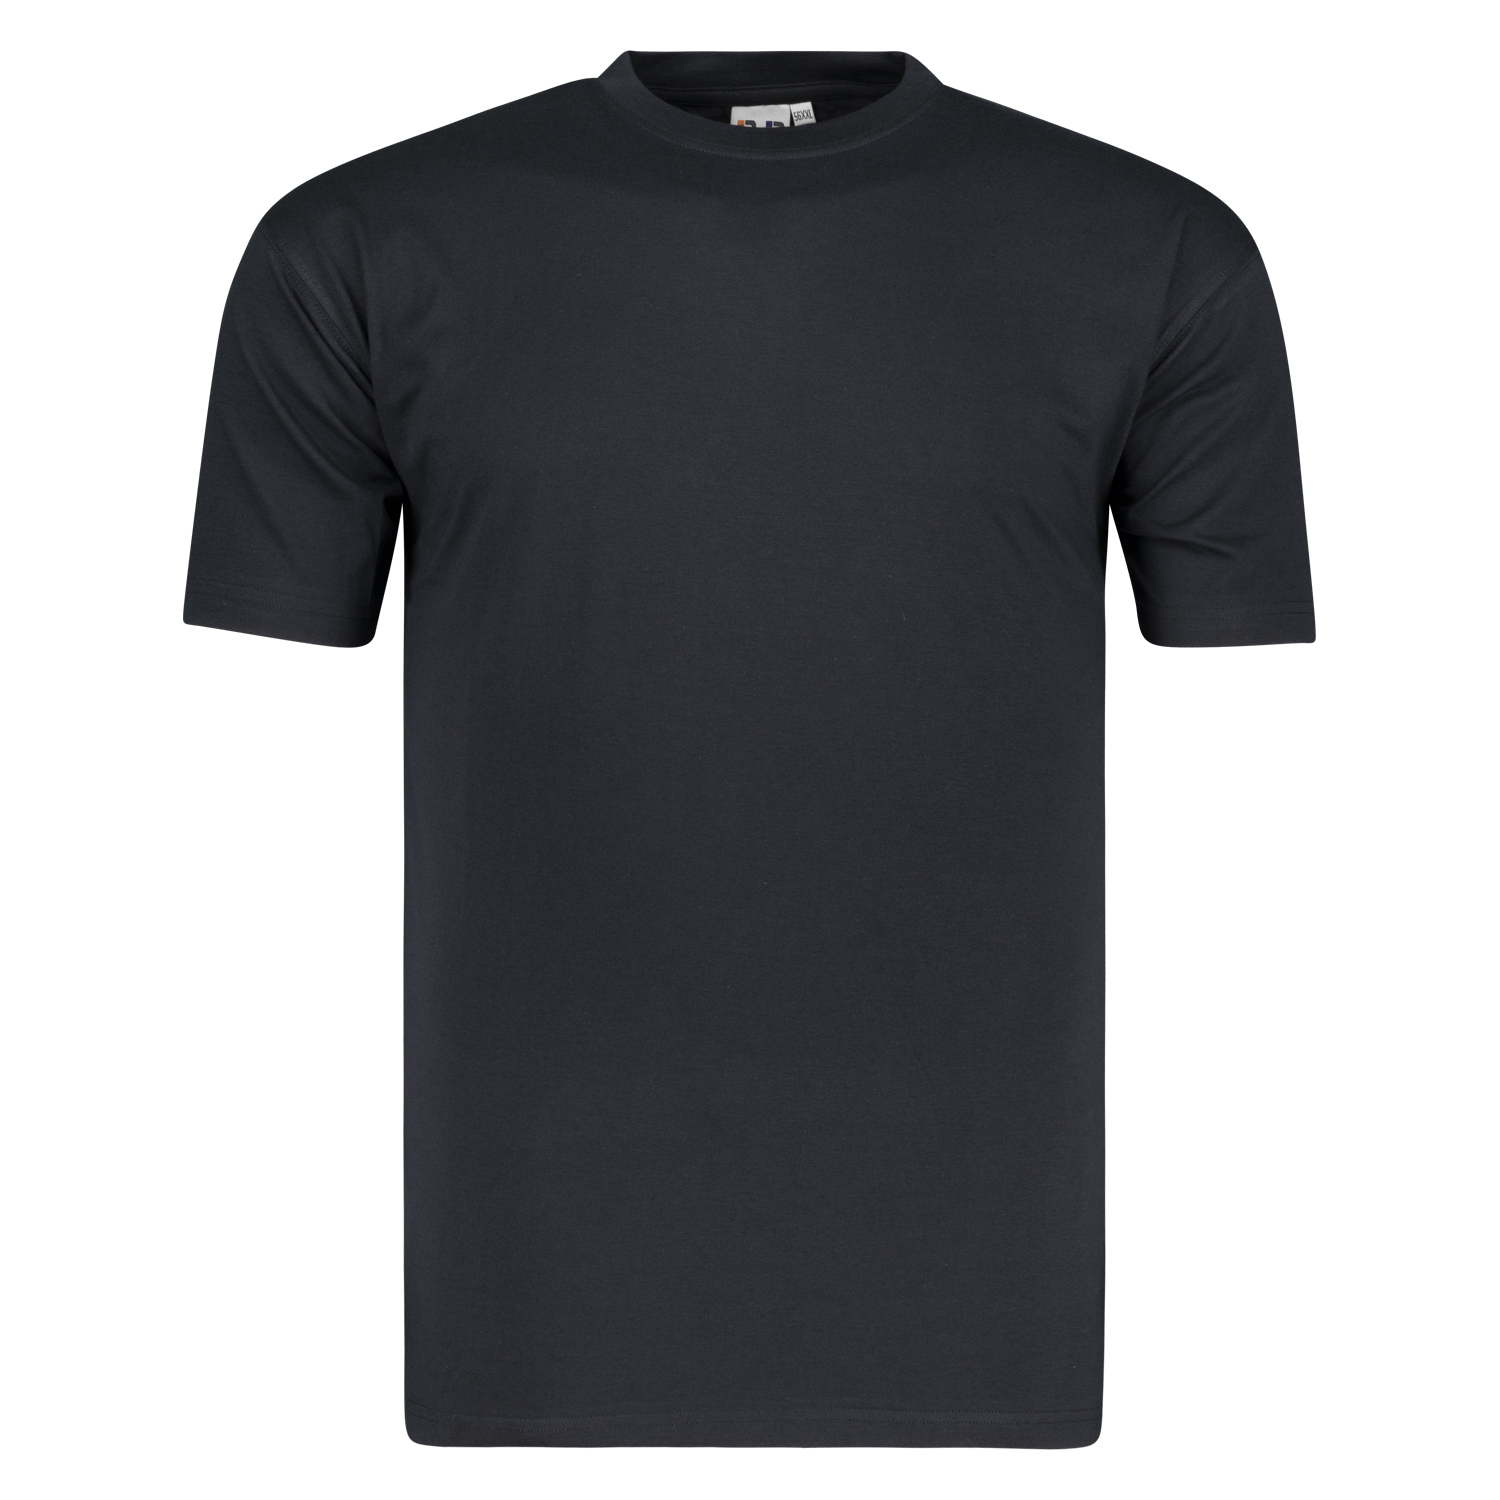 Black double pack t-shirt by BigBasics up to kingsize 8XL